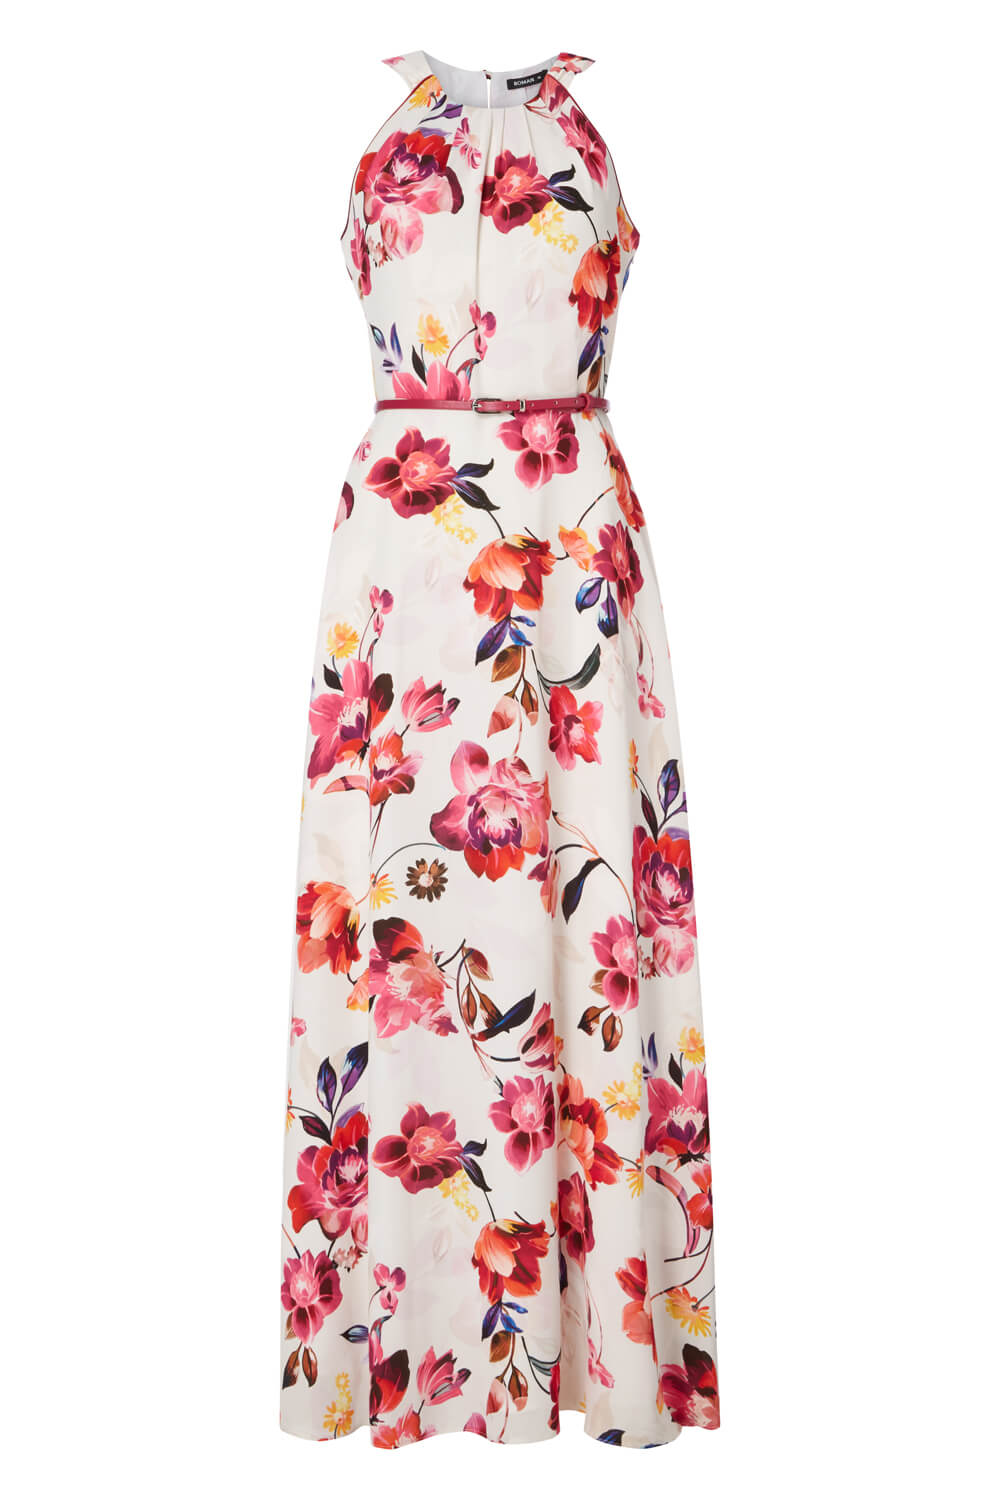 Floral Belted Maxi Dress in Fuchsia - Roman Originals UK